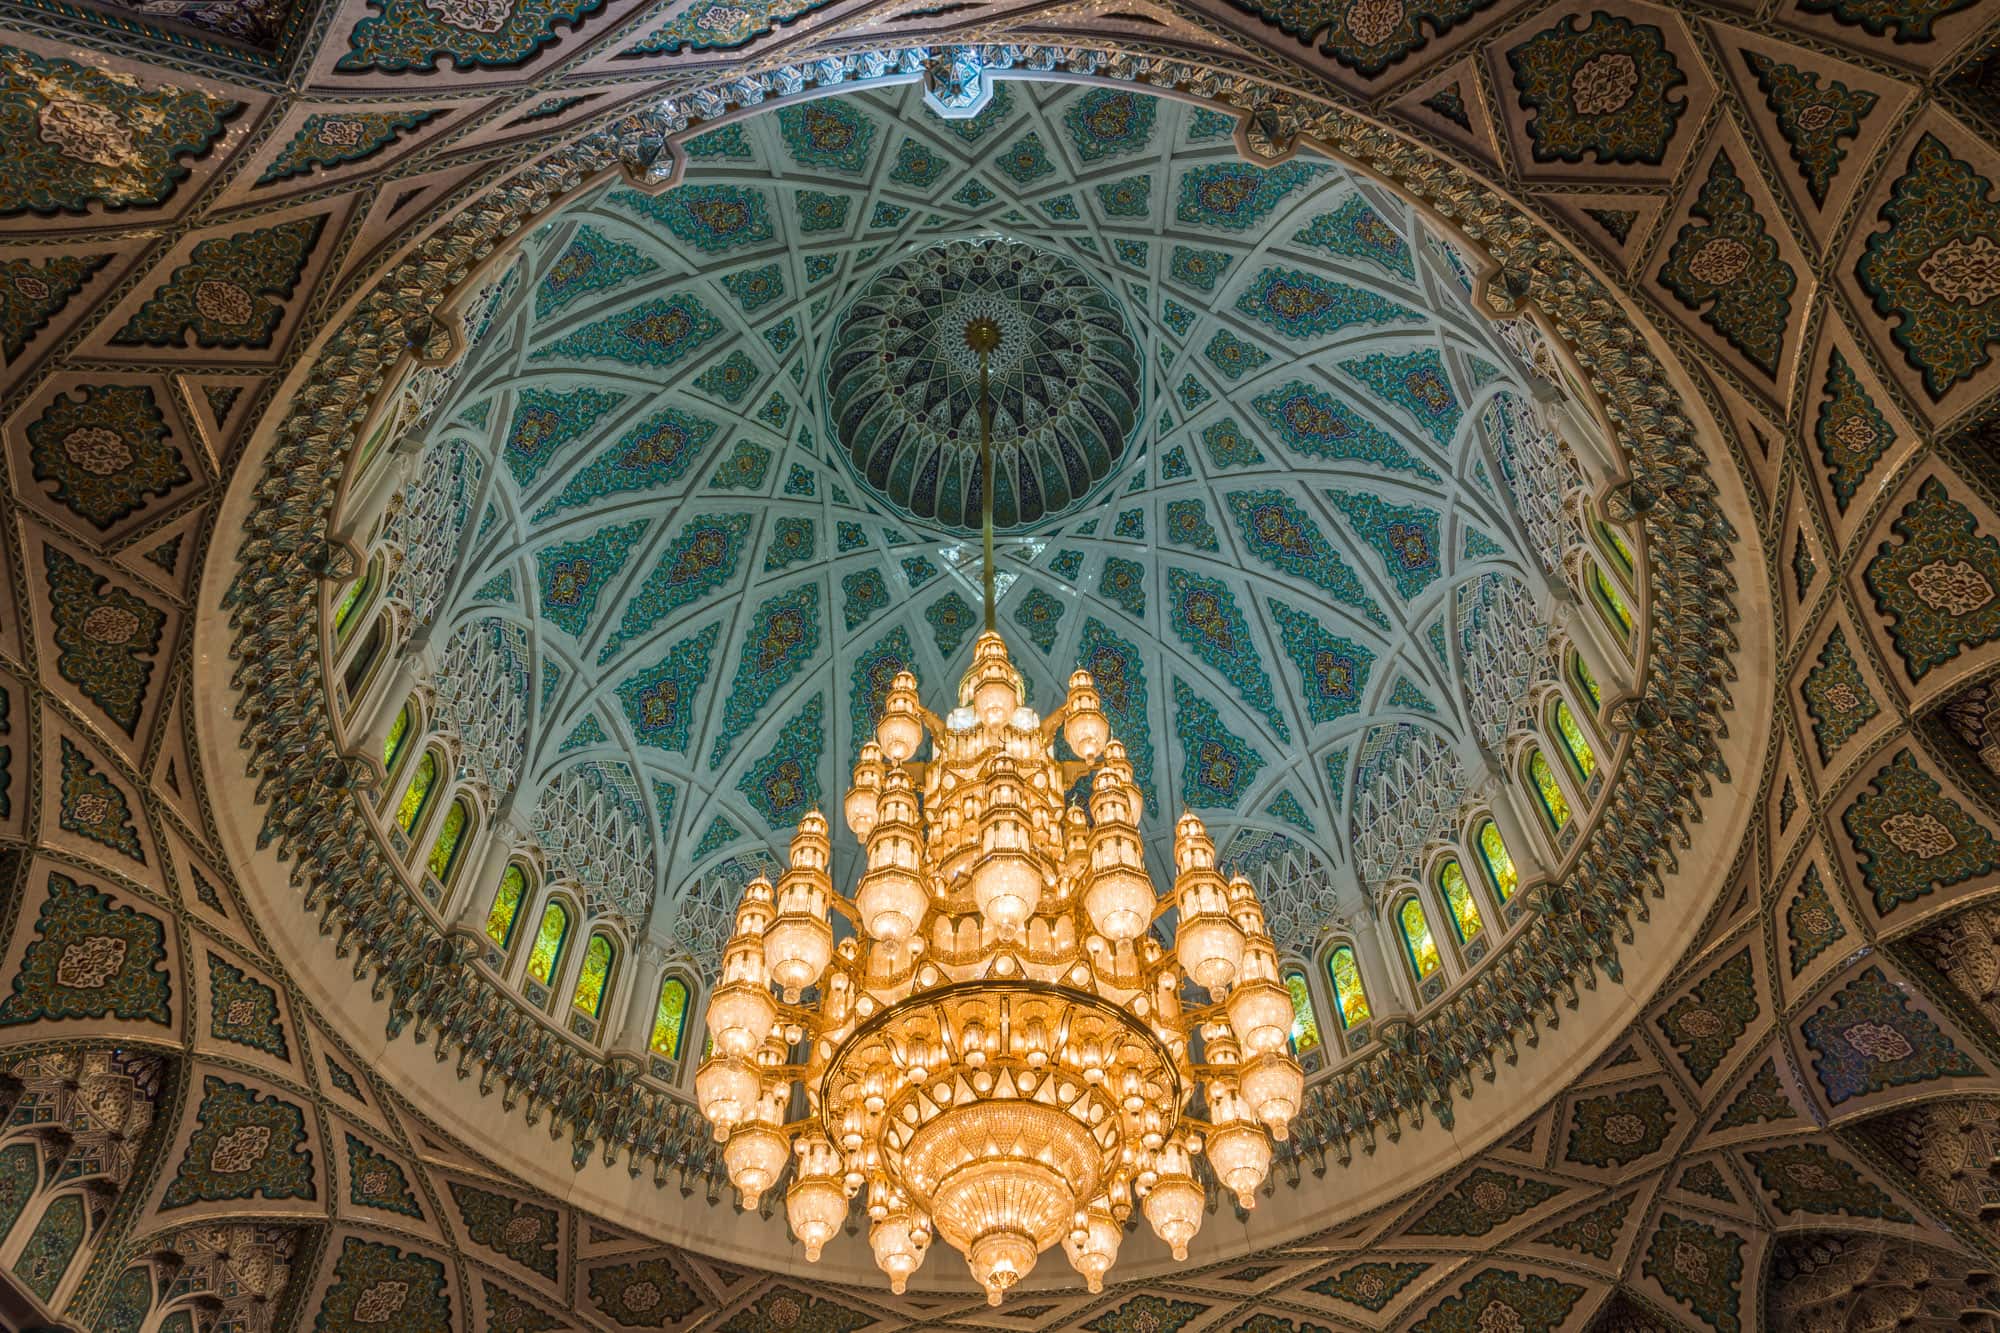 Chandelier inside Qaboos Mosque